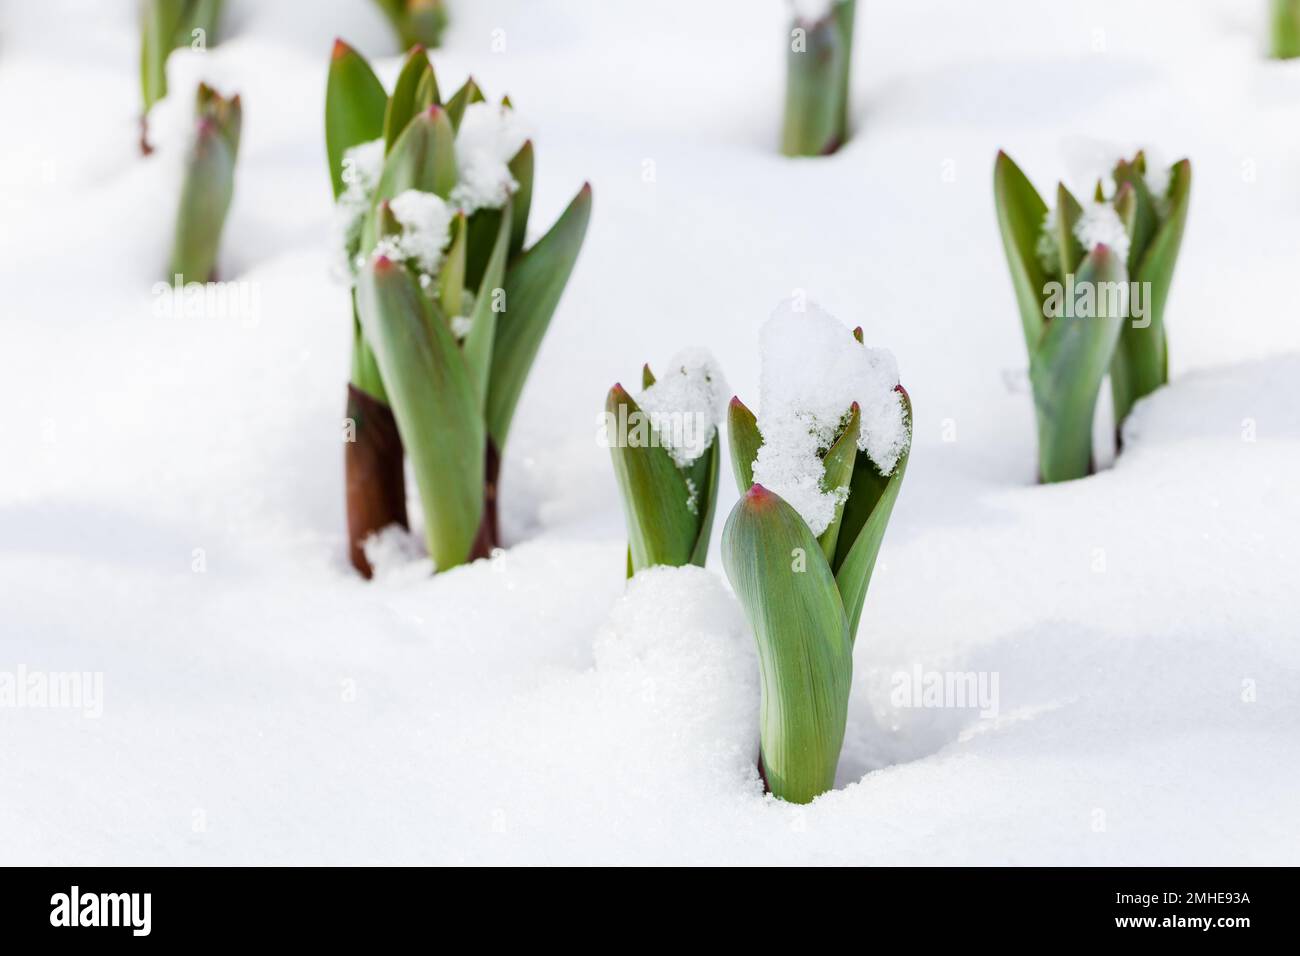 Green plant sprouting through the snow at springtime Stock Photo